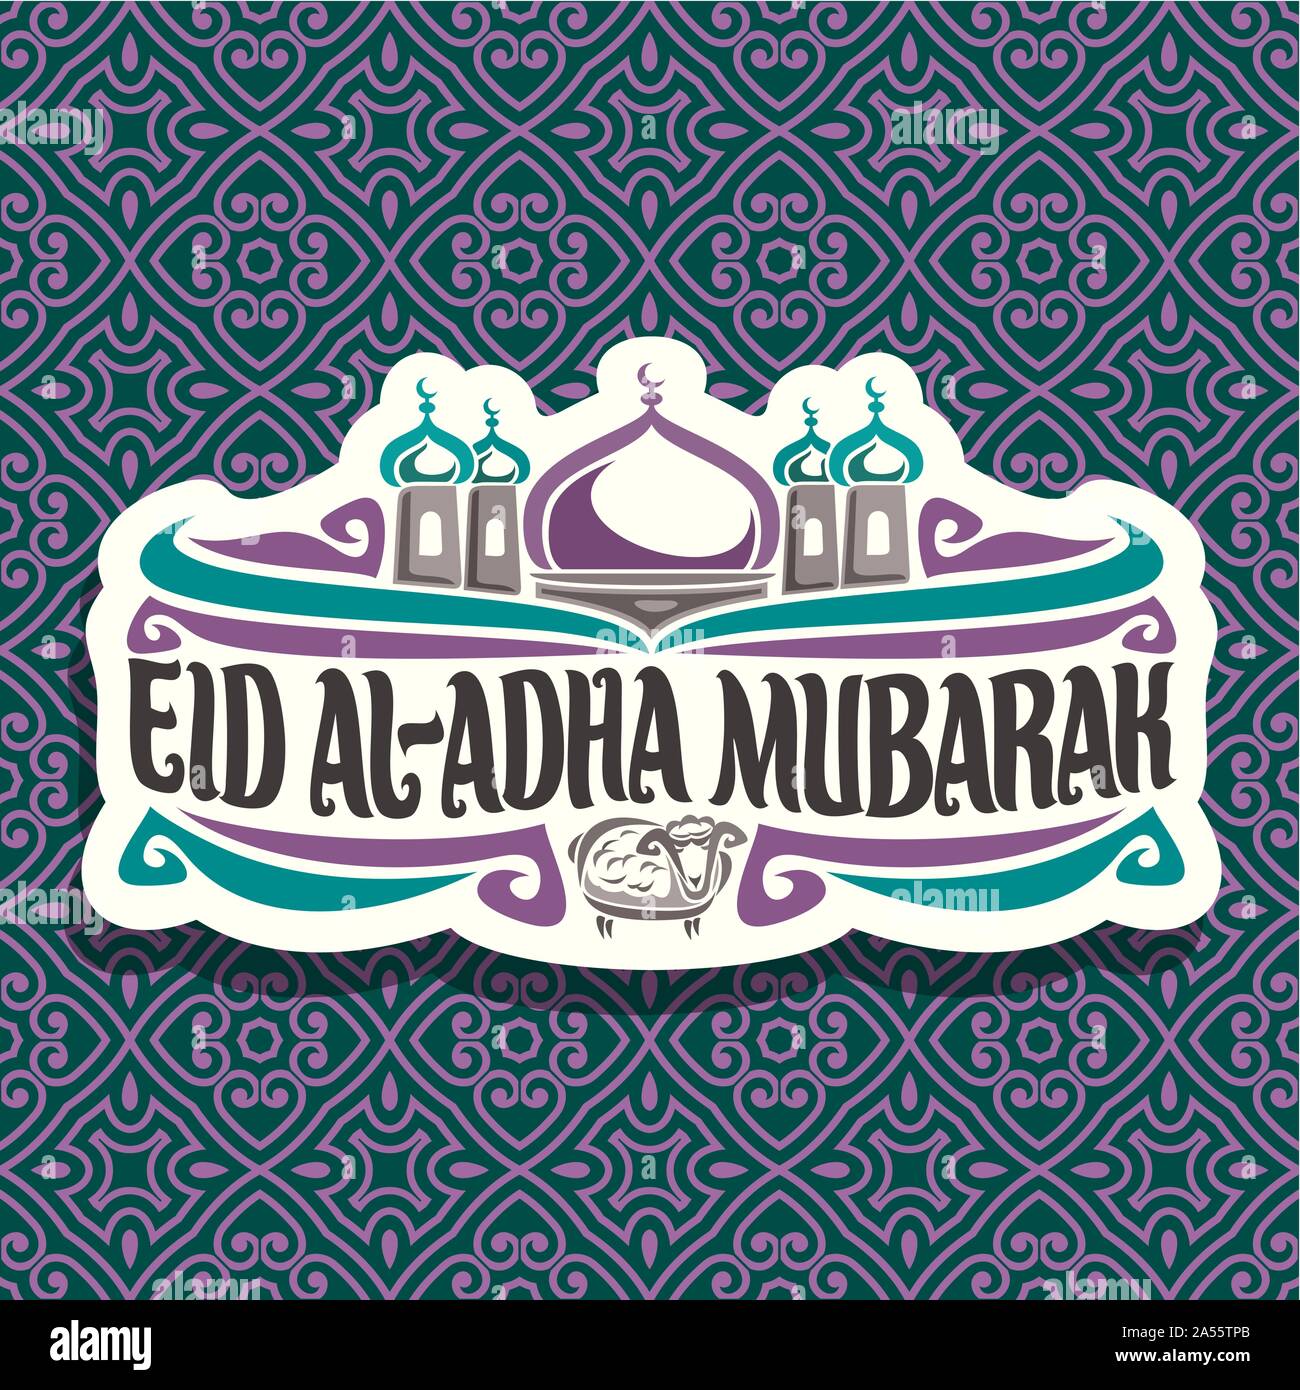 Eid ul adha mubarak hi-res stock photography and images - Alamy